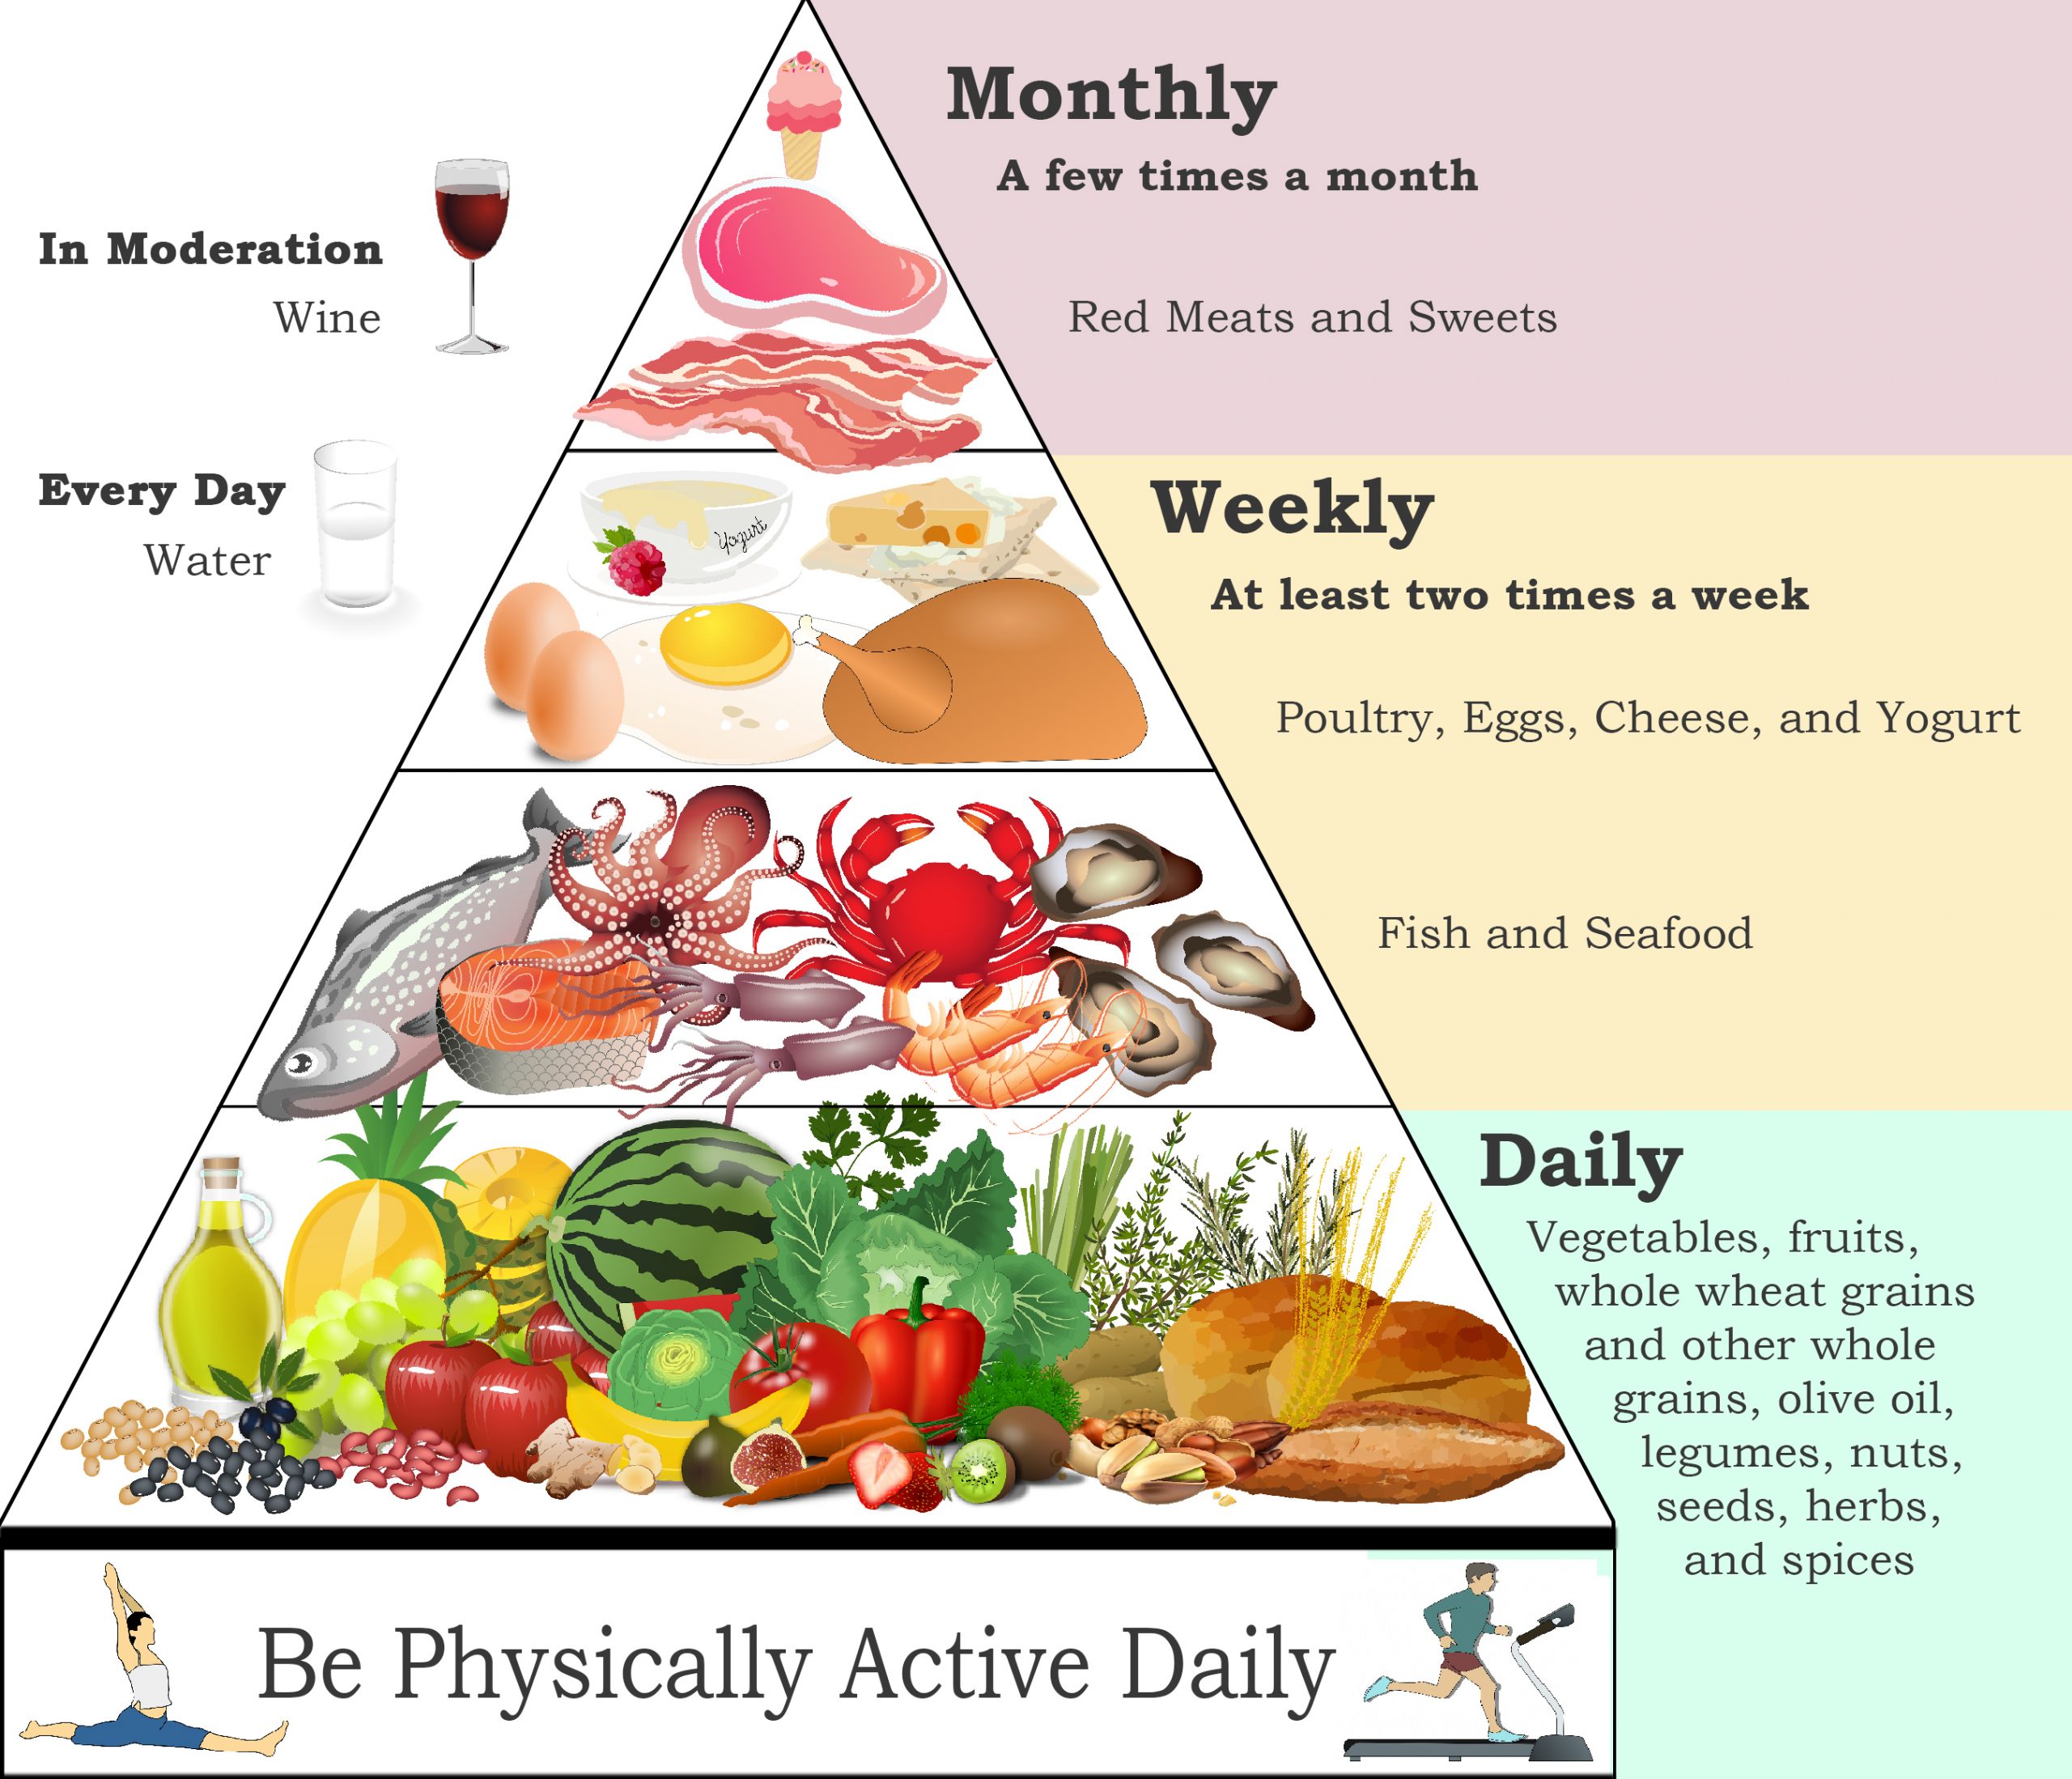 Mediterranean Diet Pyramid Printable Customize and Print